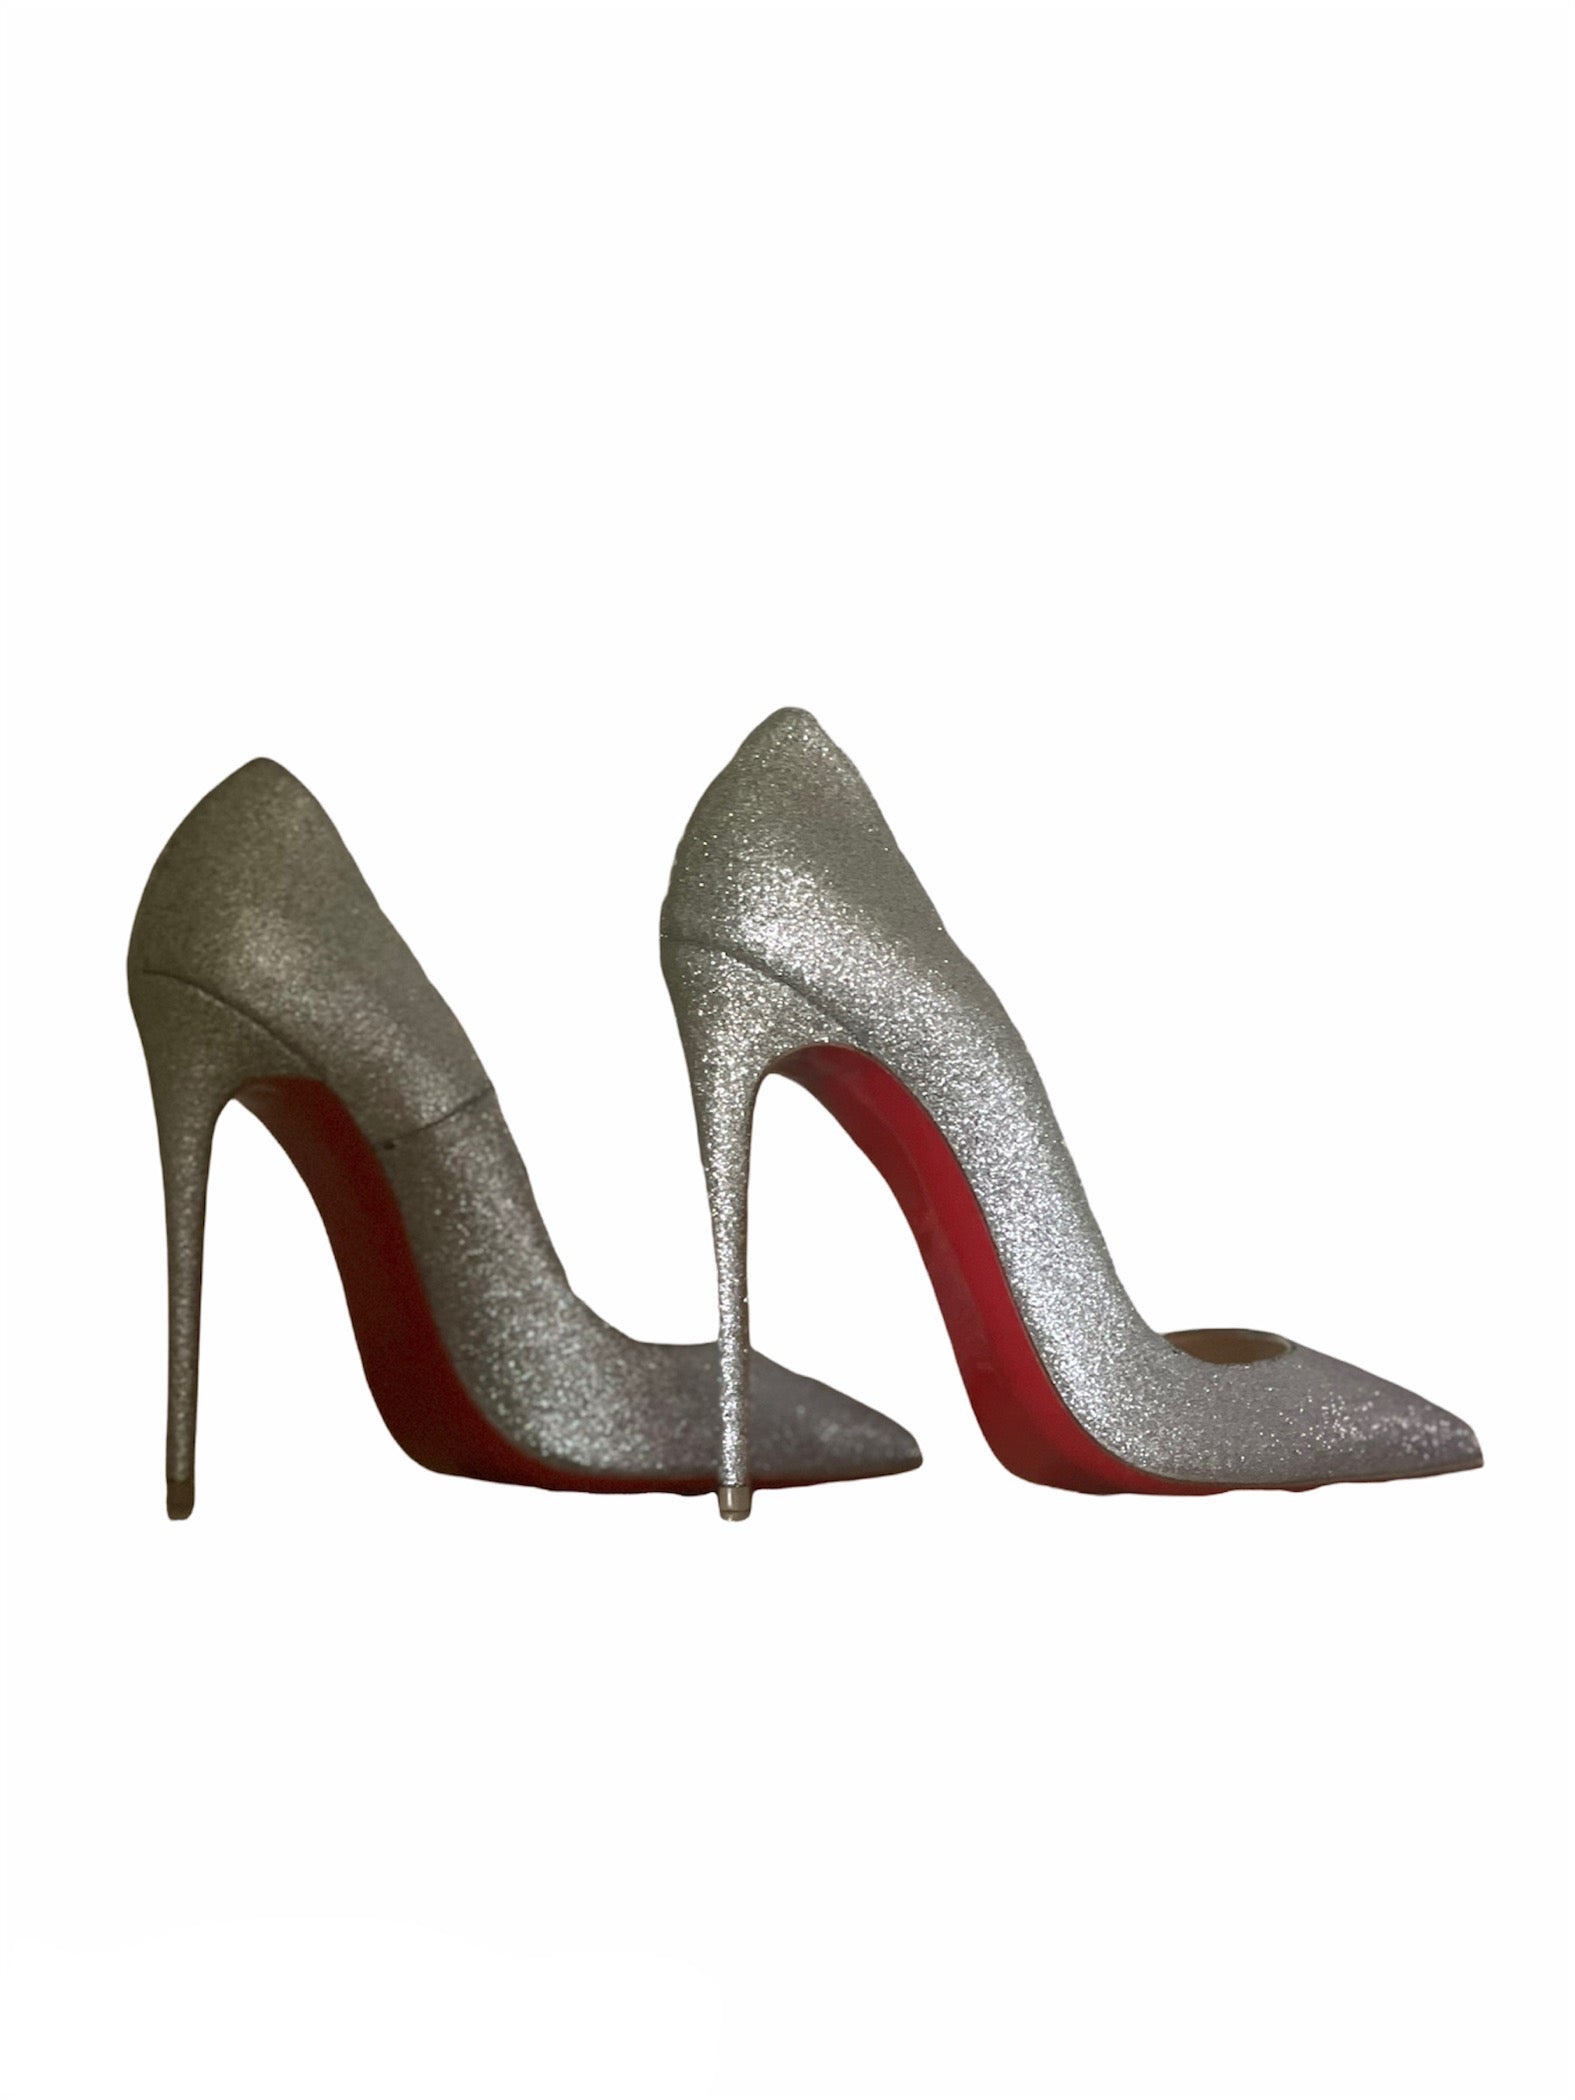 Christian Louboutin metallic ombré heels